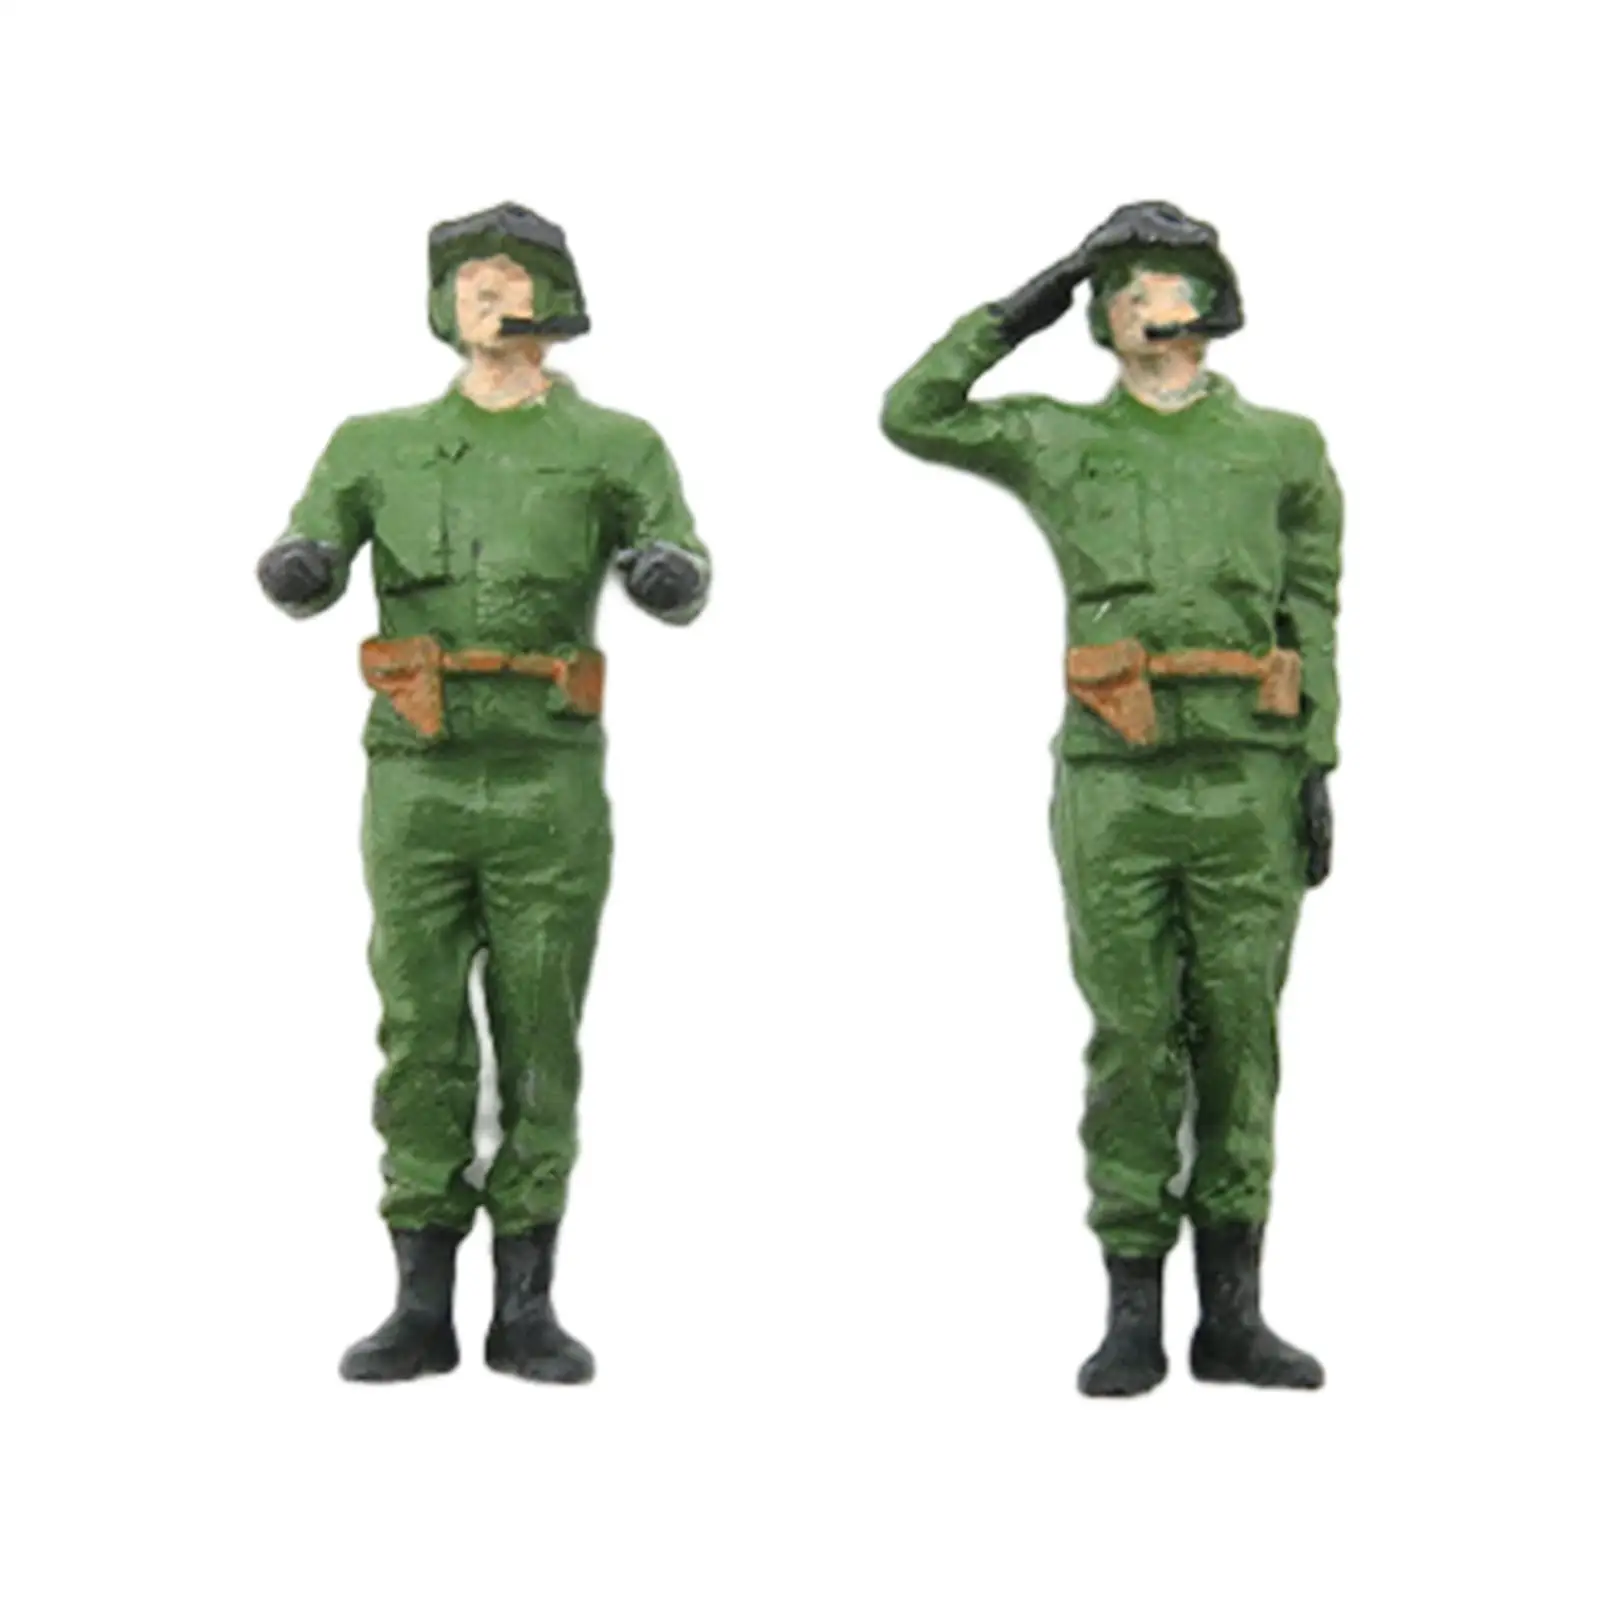 2Pcs 1/72 Scale Miniature Figure Action Figures Soldiers Toys for Architecture Model Dollhouse Accessories Miniature Scenes